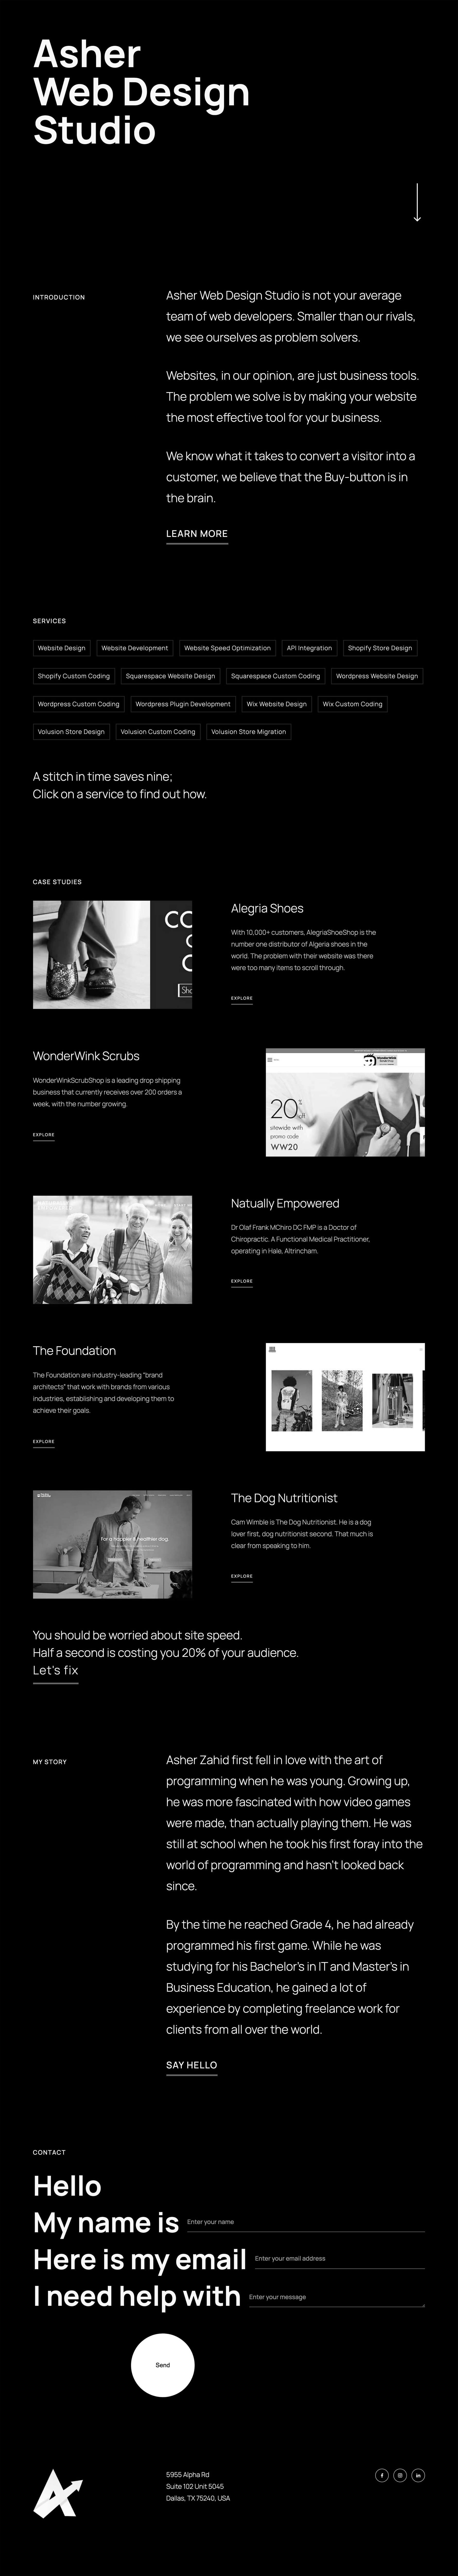 Asher Web Design Studio Website Screenshot